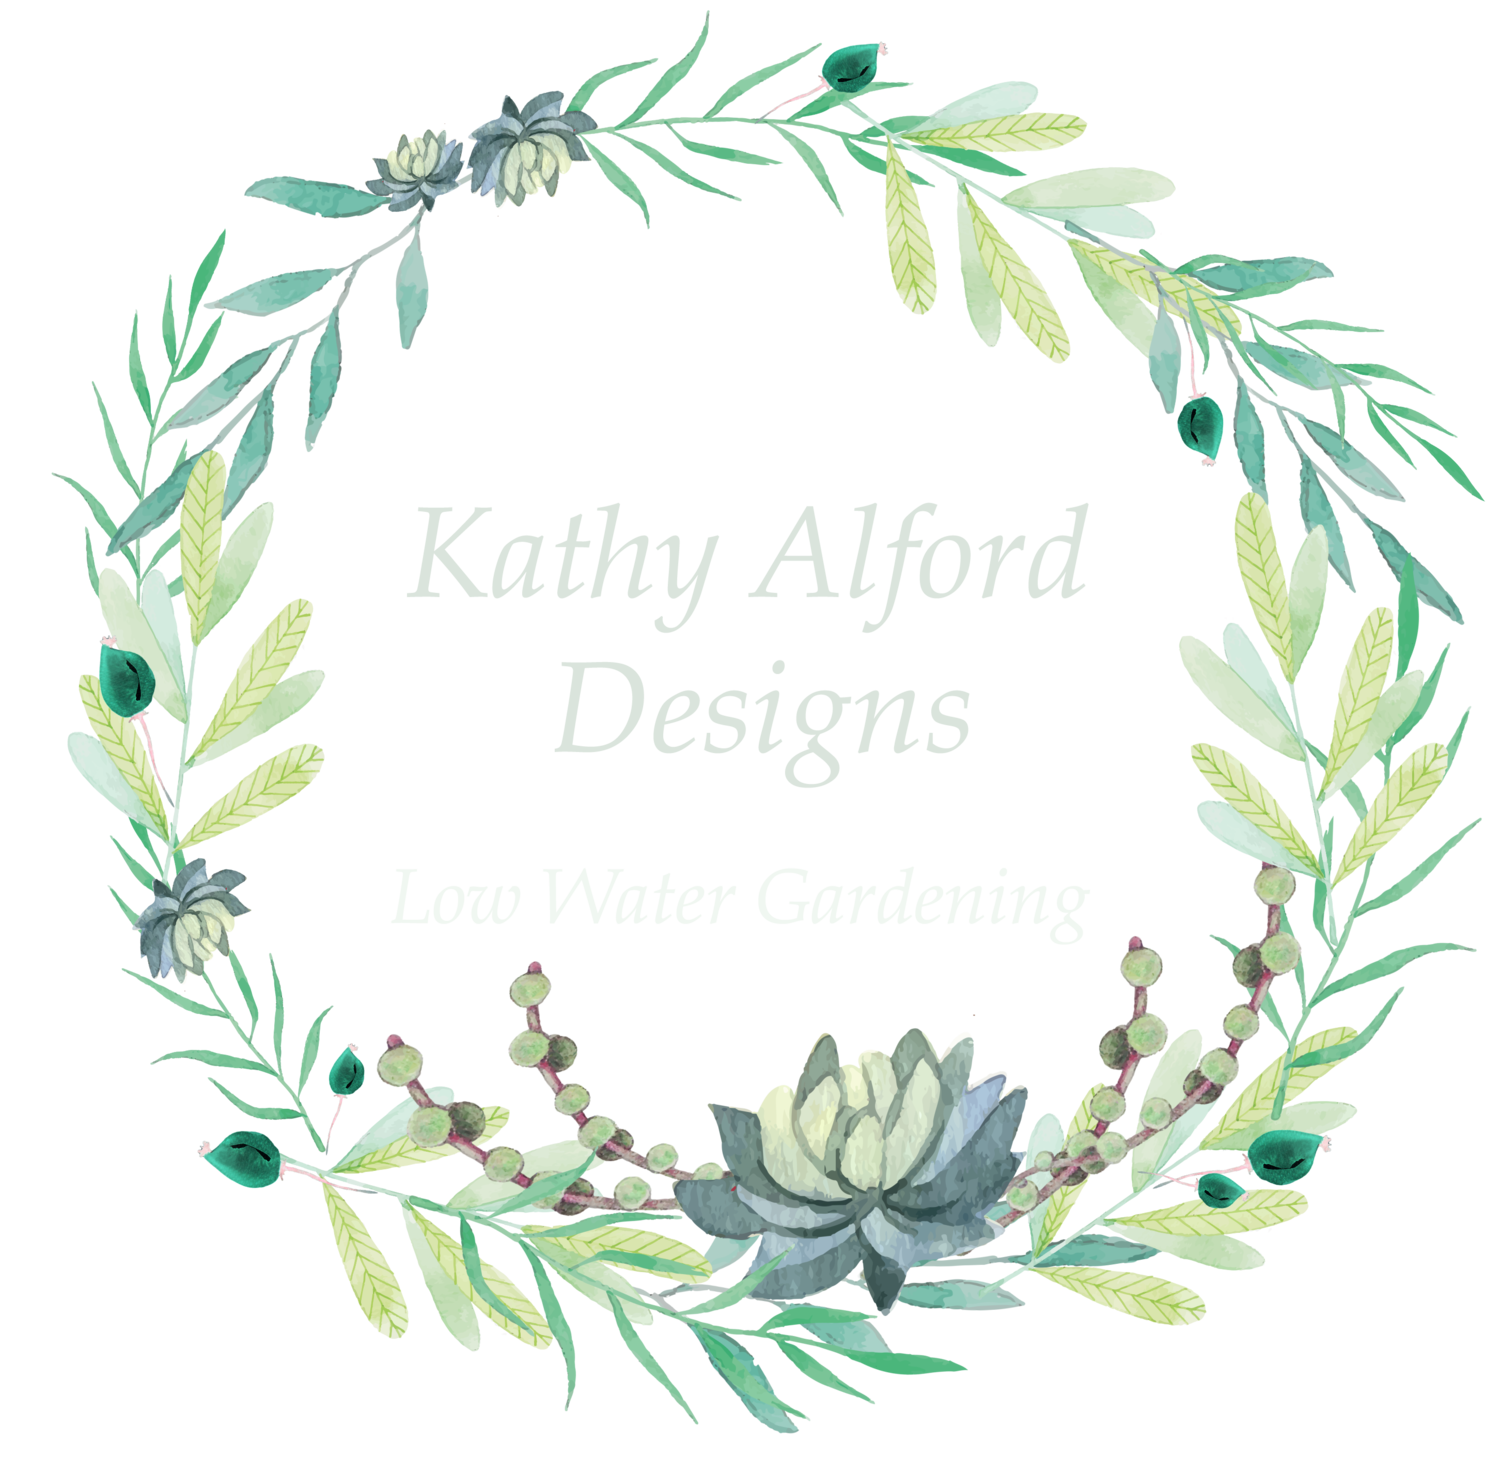 Kathy Alford Designs